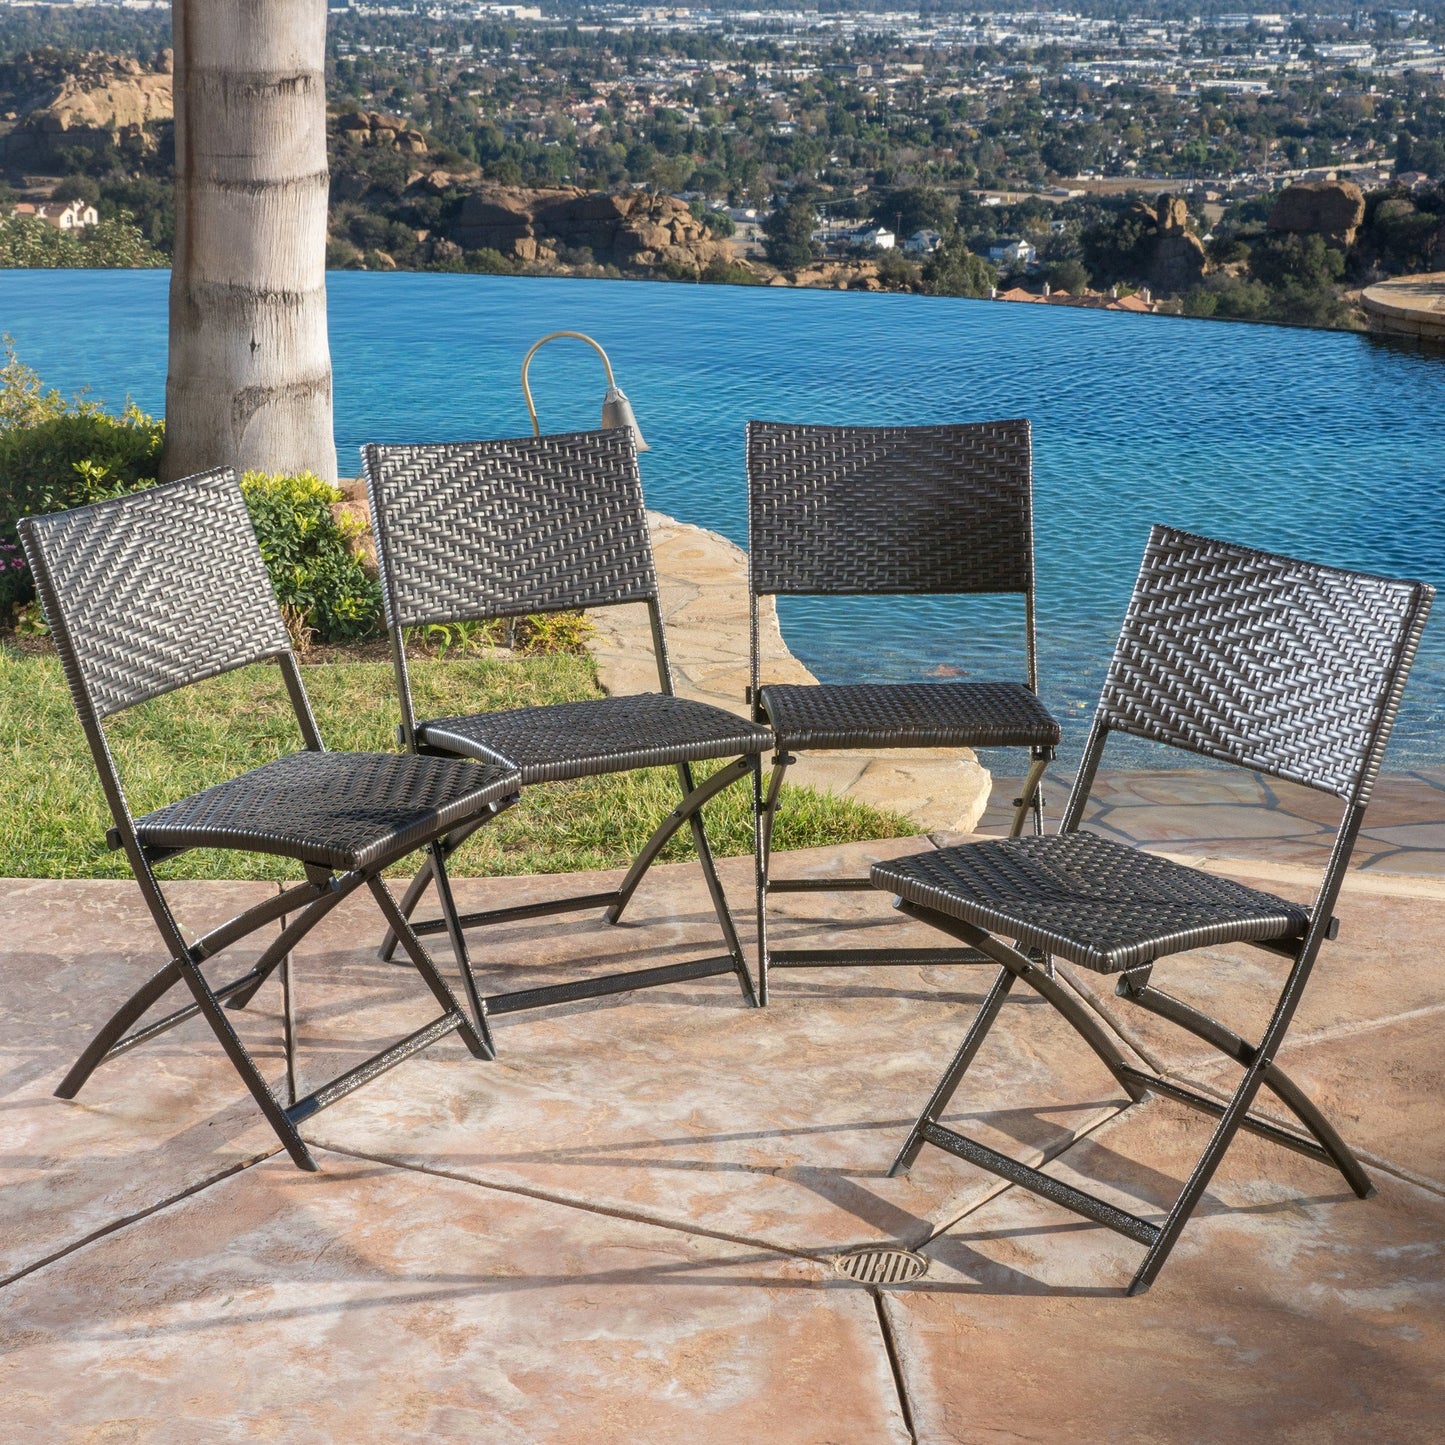 Jason Outdoor Brown Wicker Folding Chair (Set of 4)